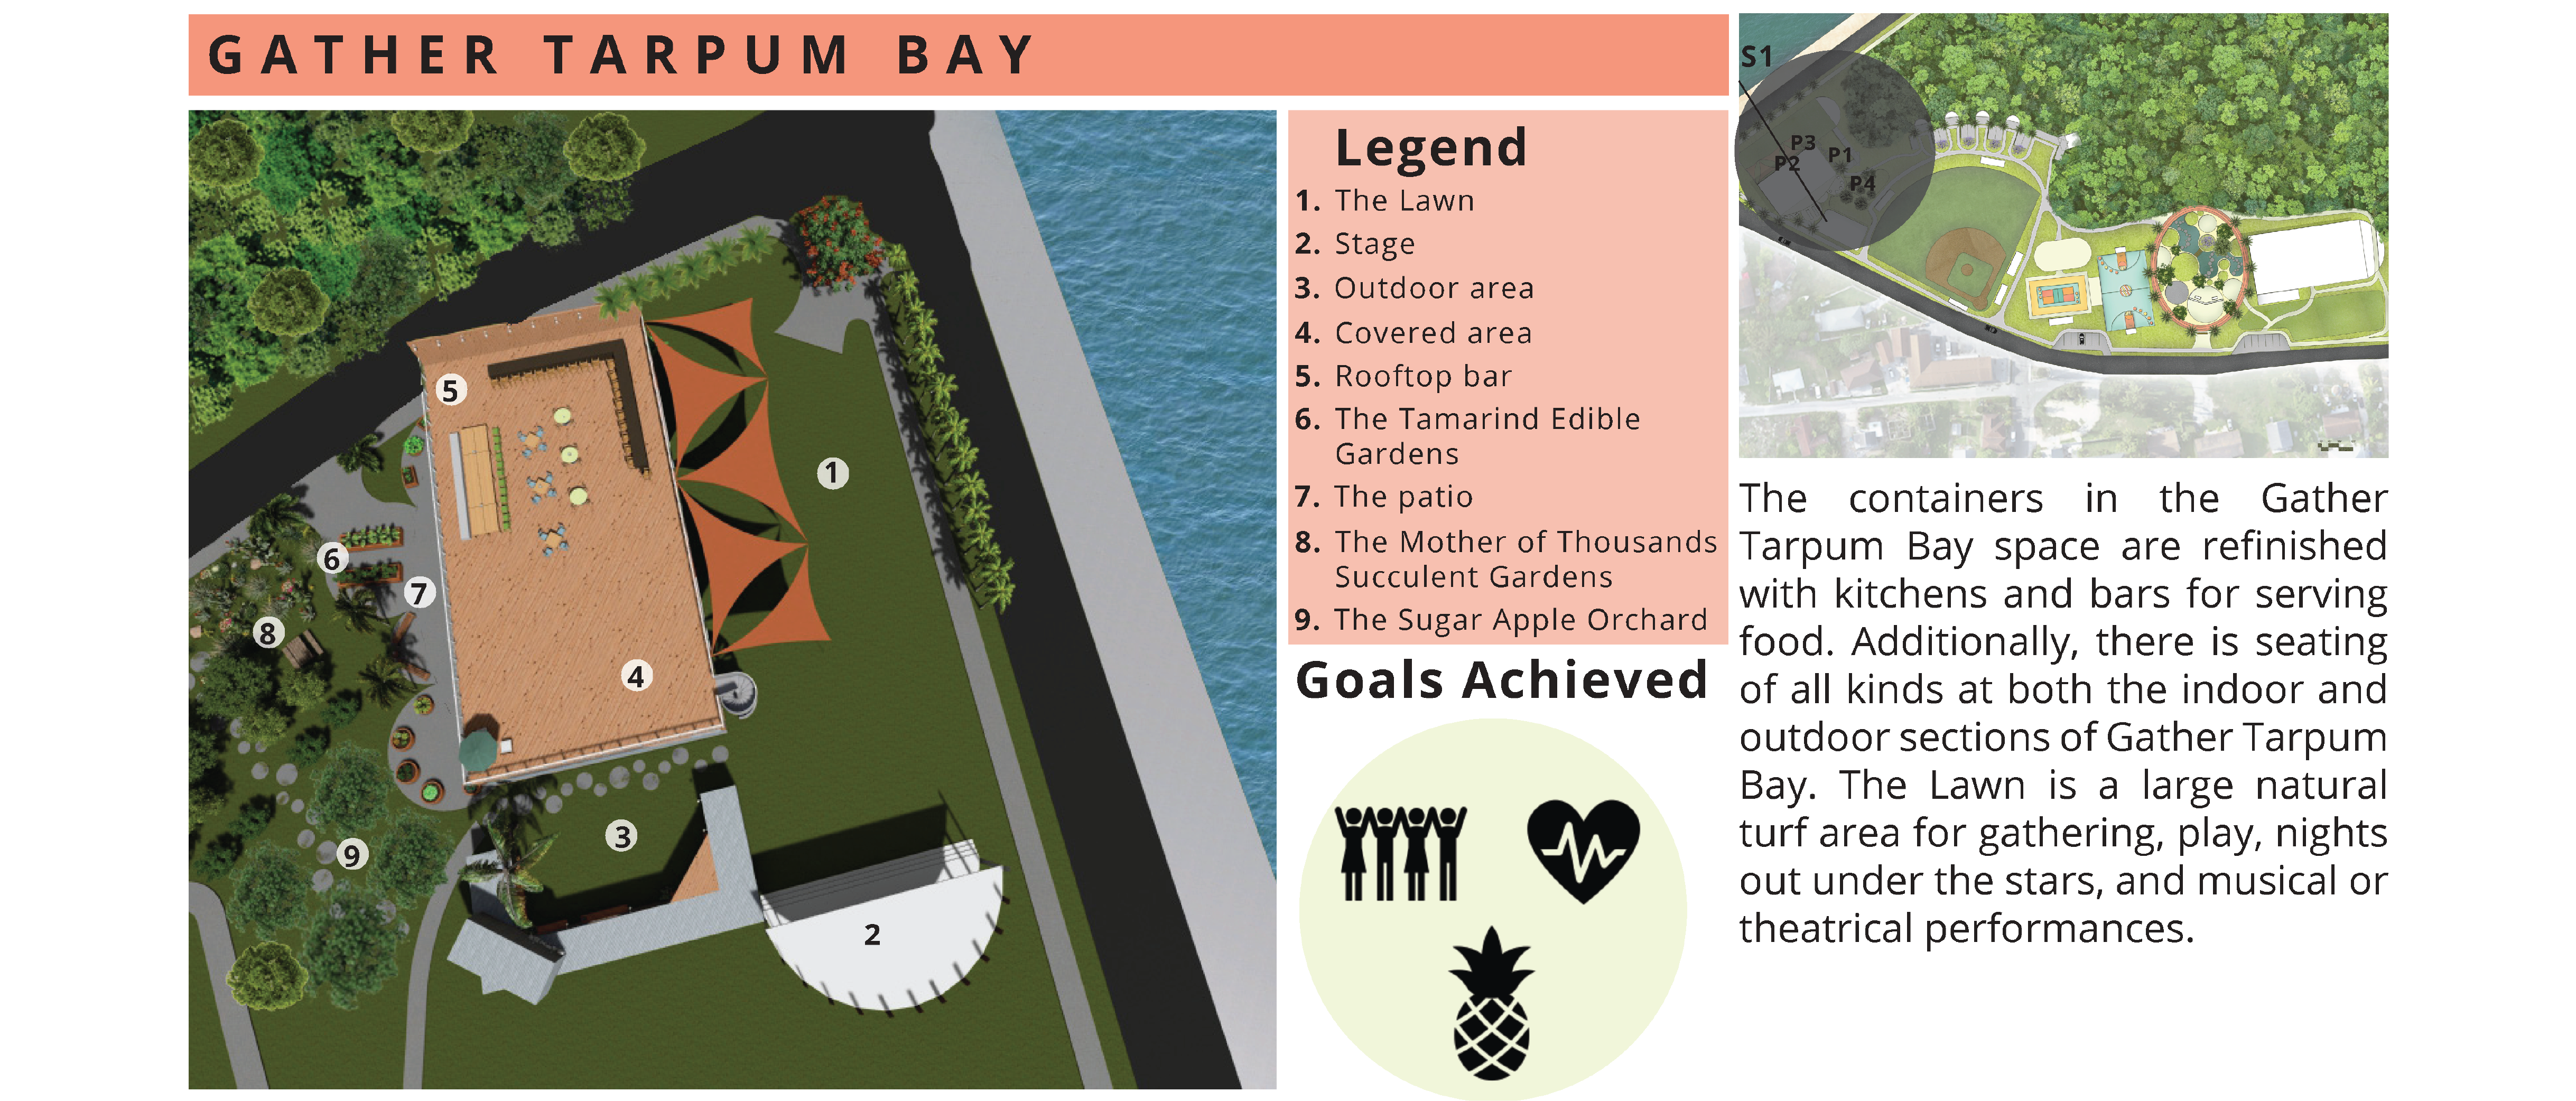 To-Gather, Together: New Life for Tarpum Bay | Caroline Yell | LARCH 2510 | Professor Nassar